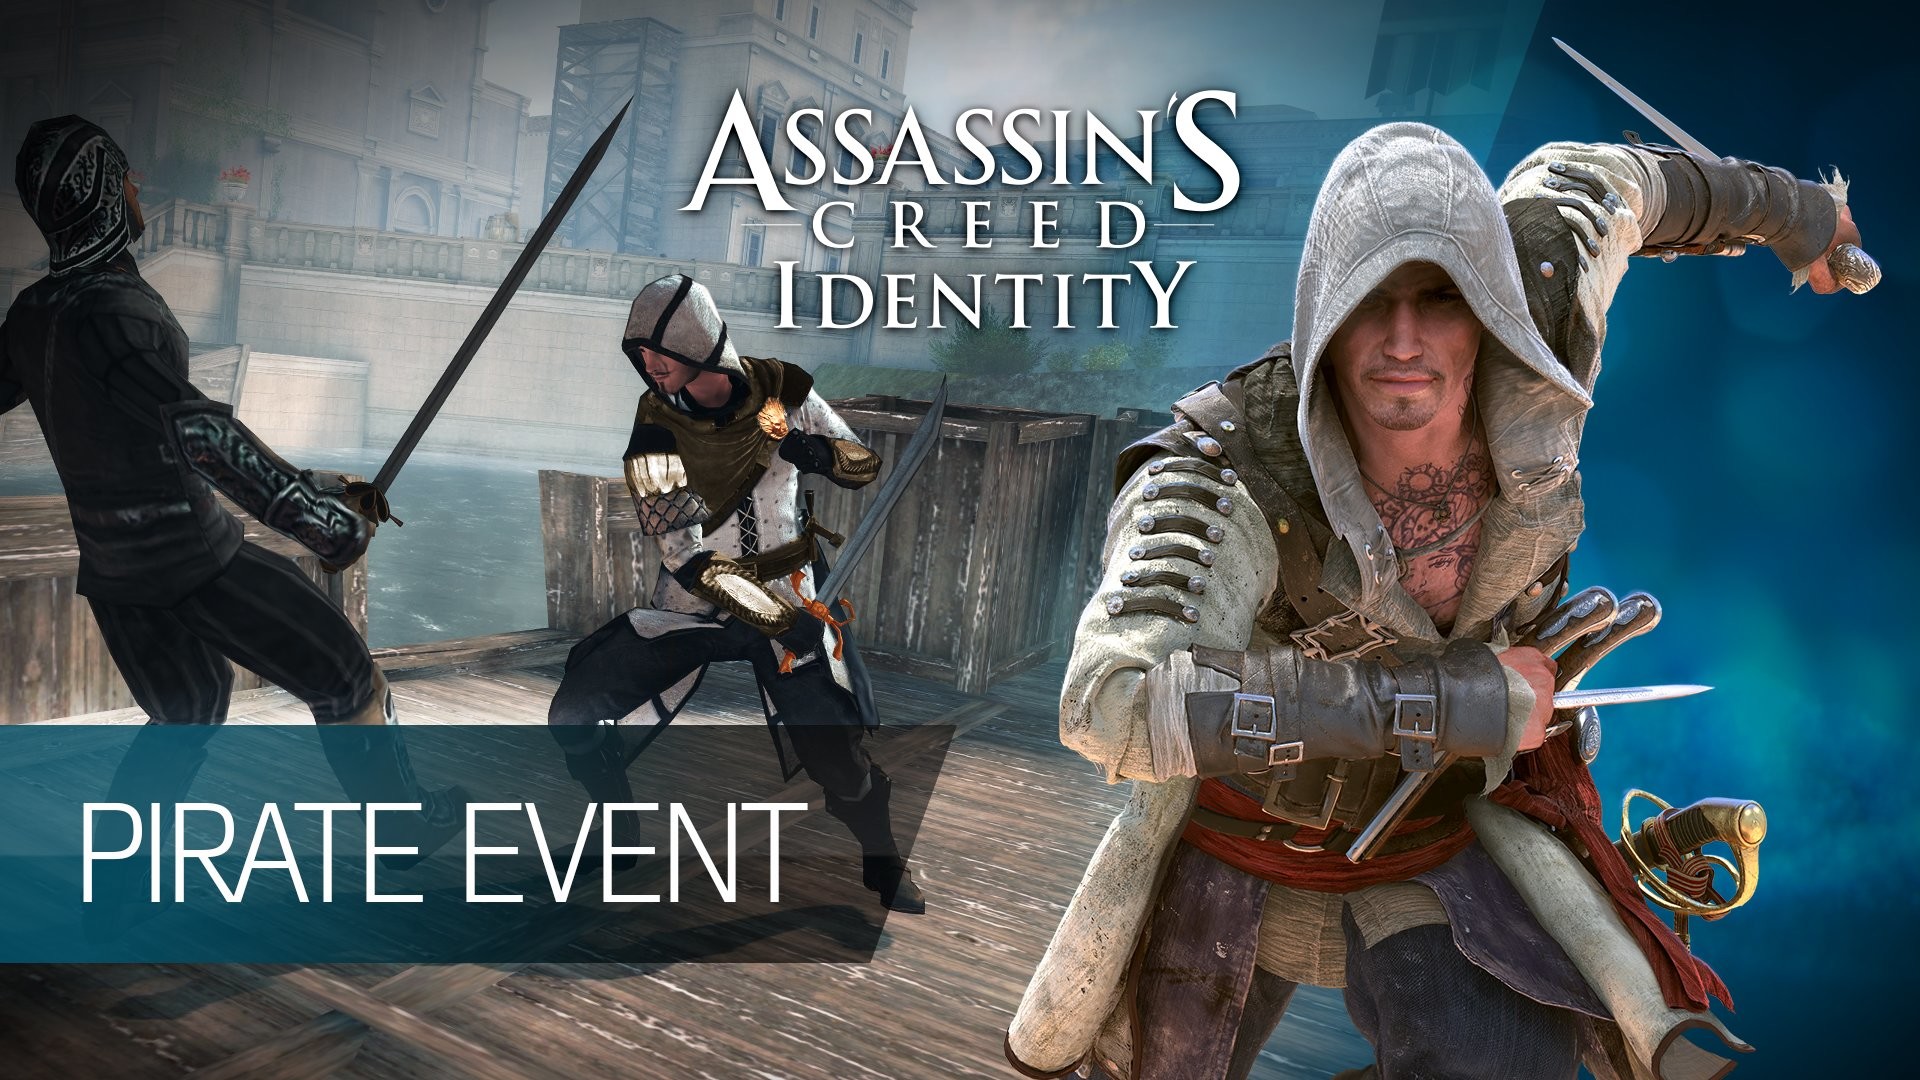 Assassin's Creed IV: Black Flag soundtrack, Assassin's Creed Wiki